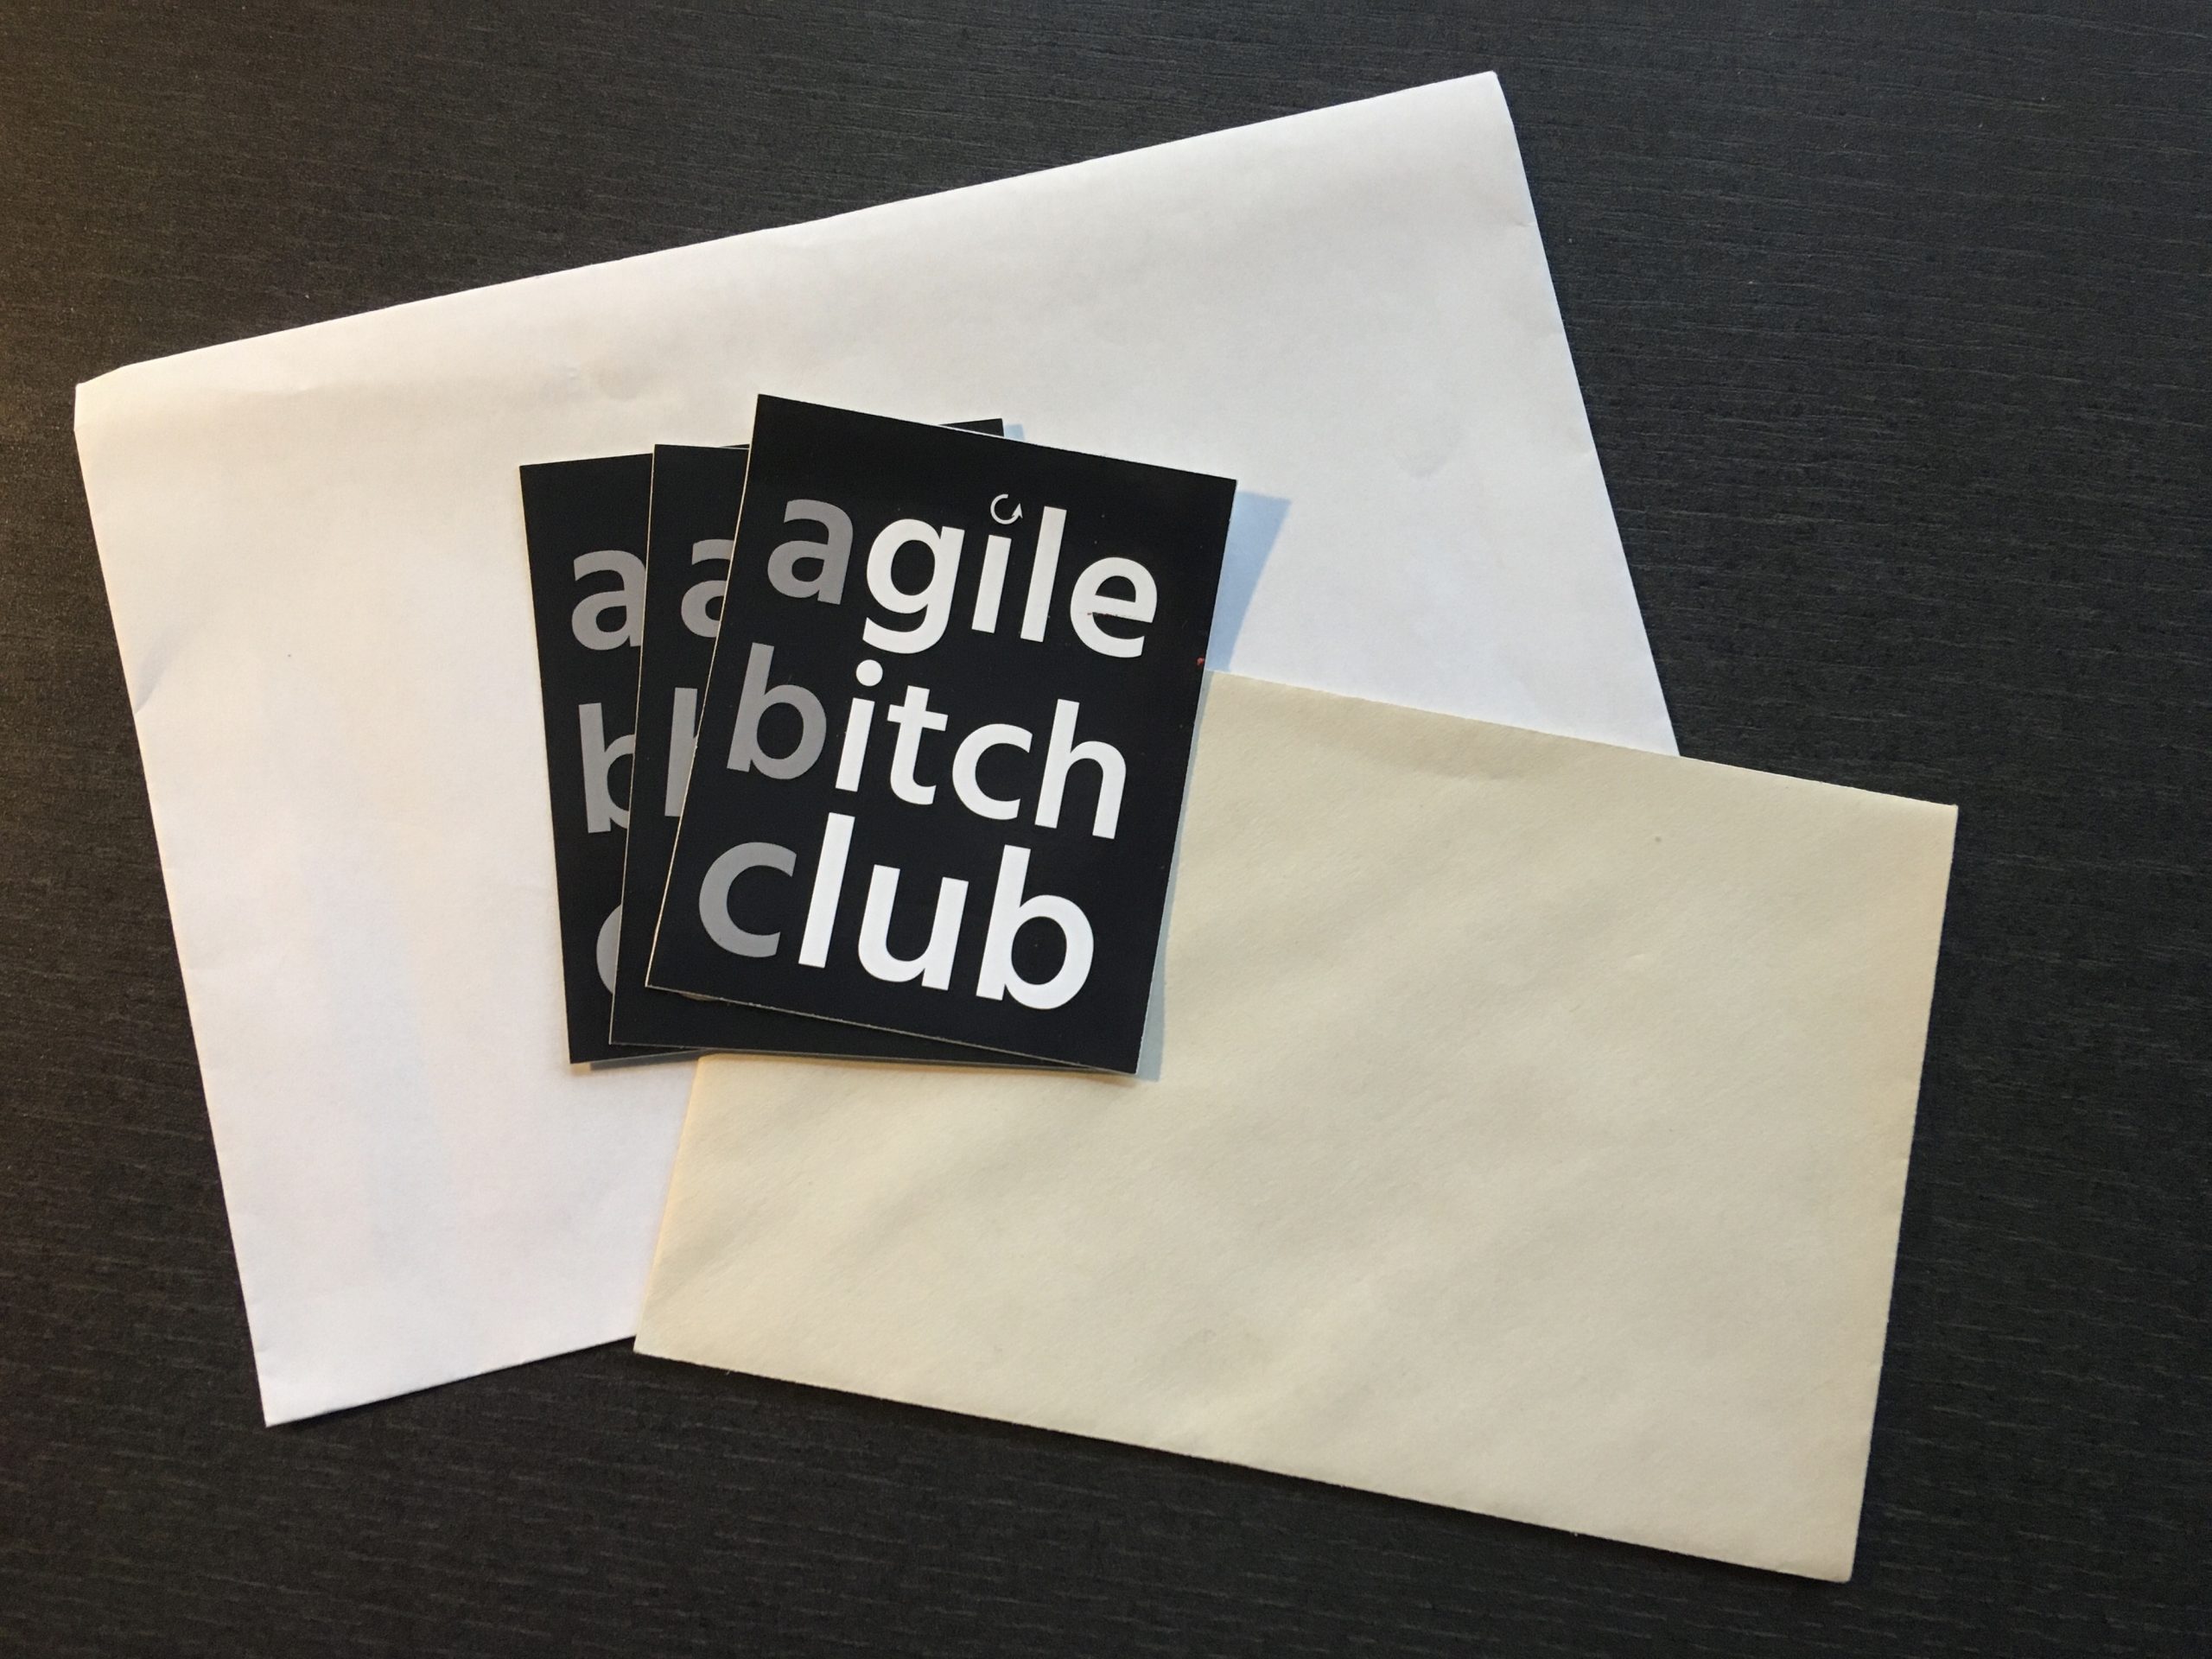 Agile Bitch Club - Sticker Exchange